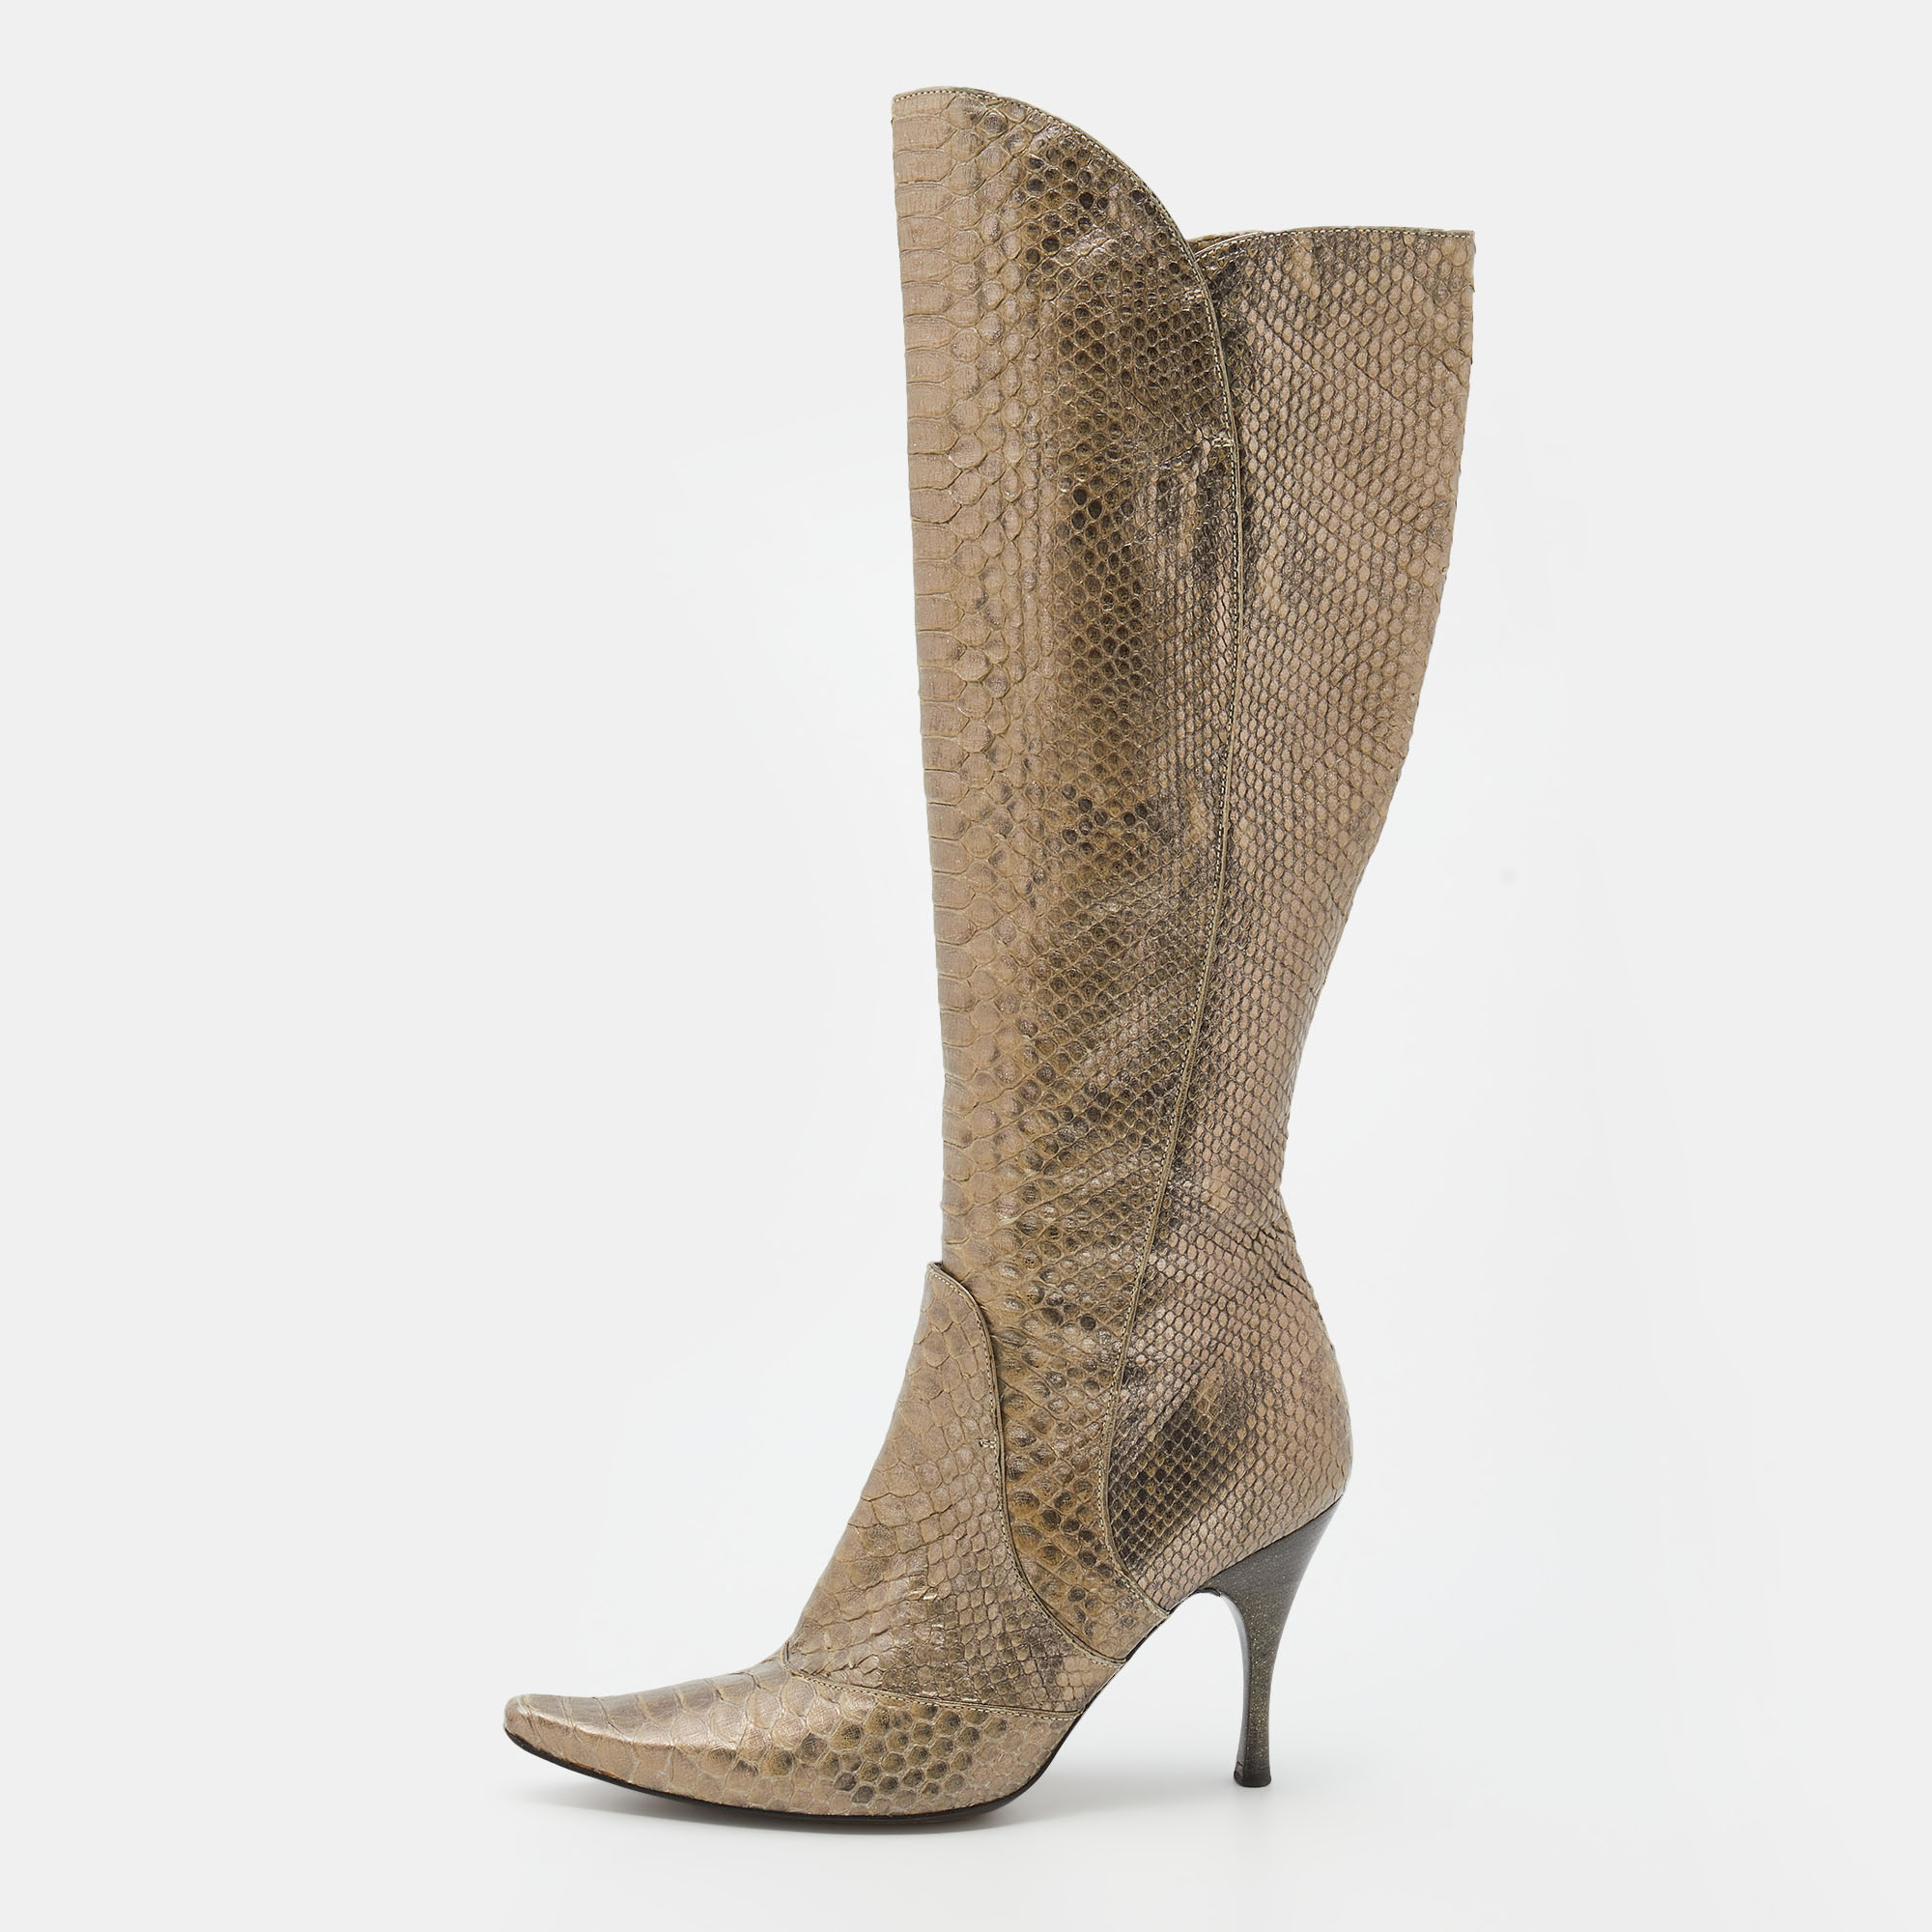 Bottega veneta metallic python knee length boots size 38